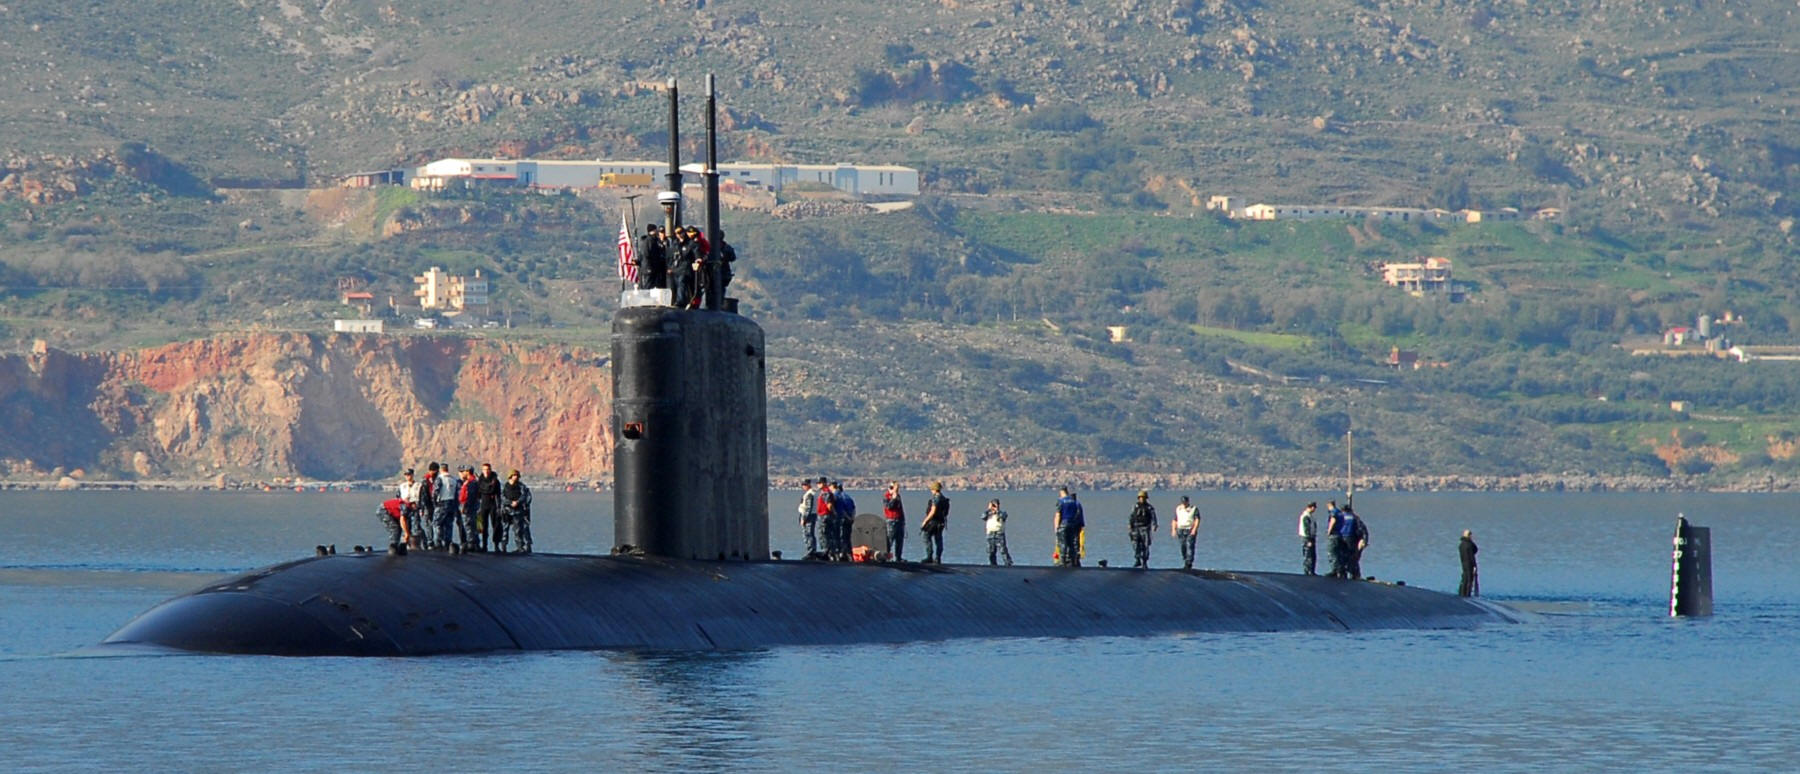 ssn-756 uss scranton los angeles class attack submarine us navy newport news shipbuilding